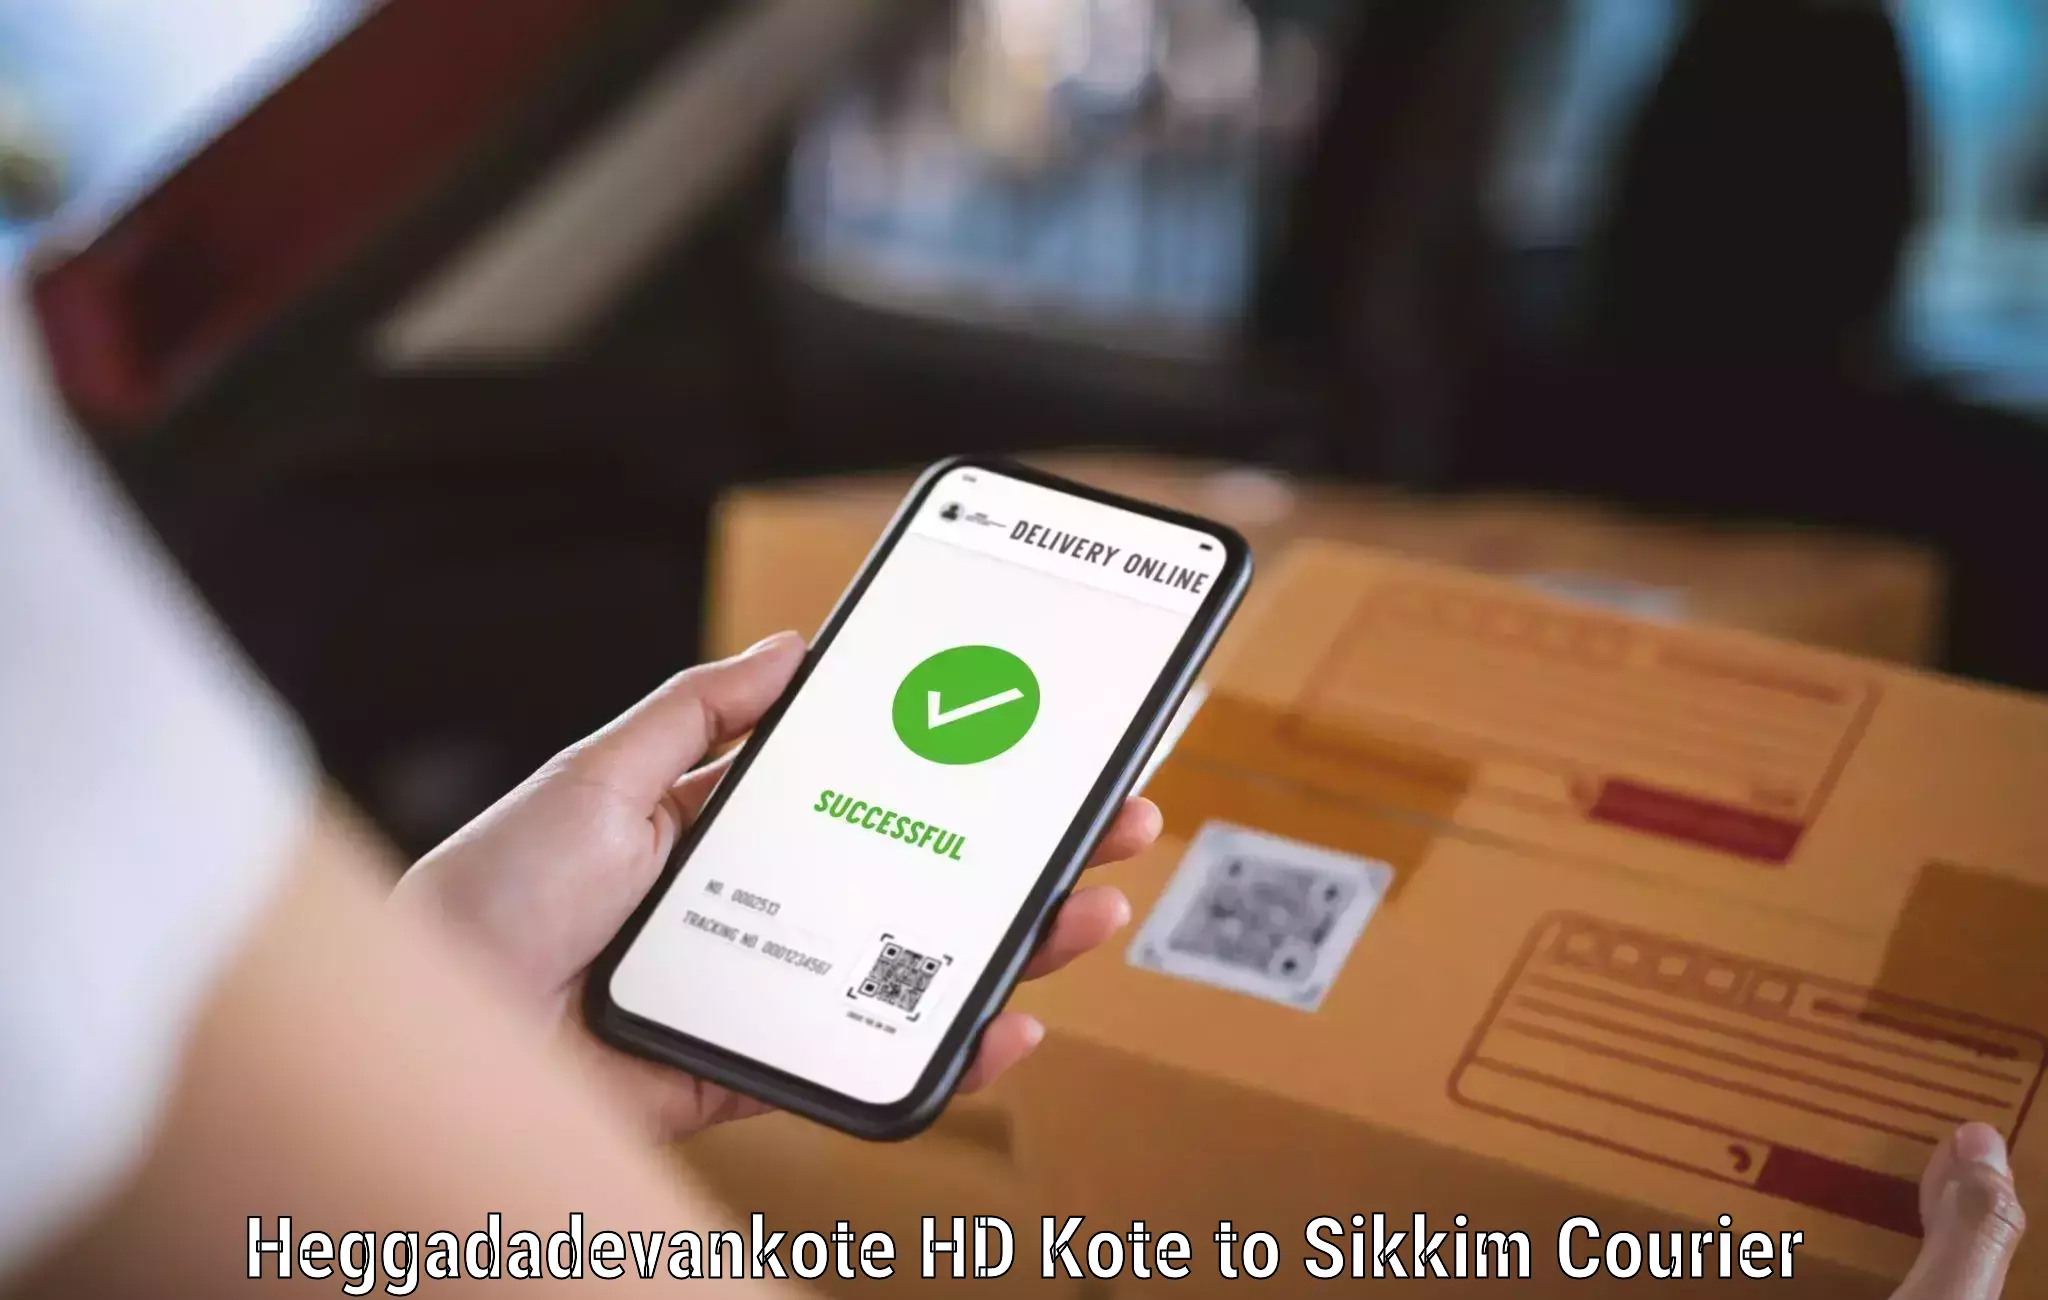 Express package delivery Heggadadevankote HD Kote to Gangtok